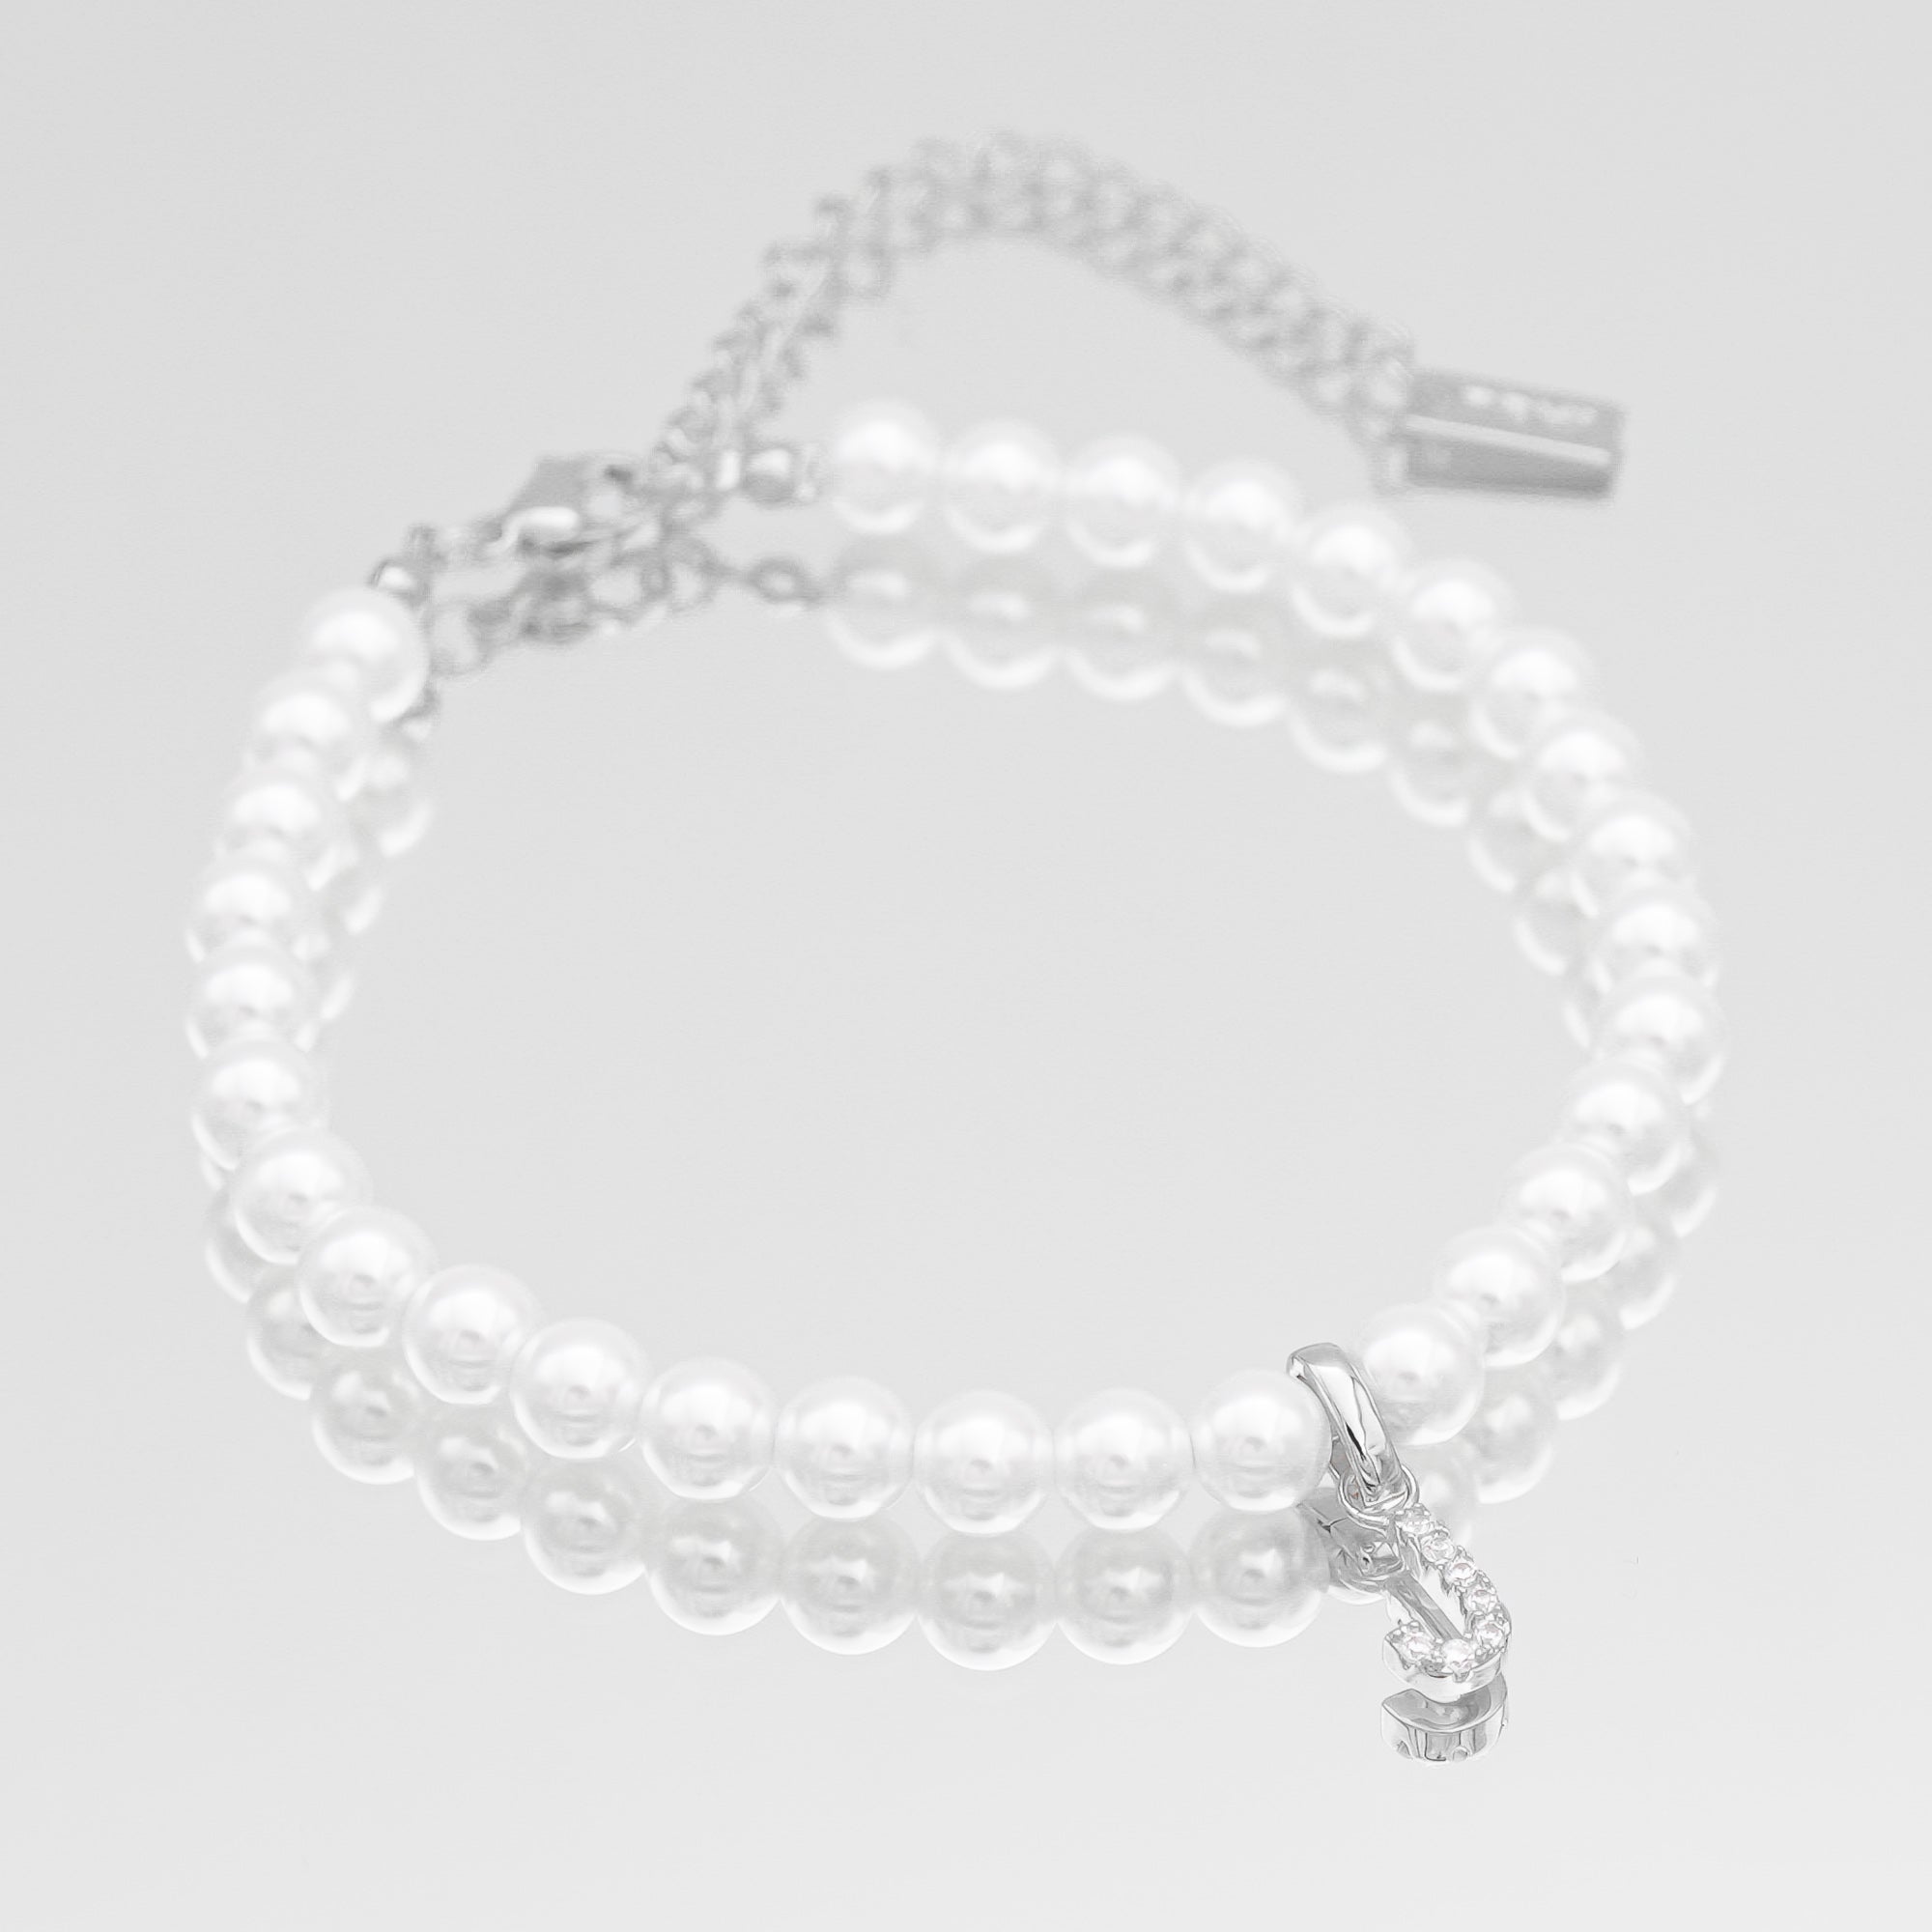 ICY Pearl Initial Bracelet